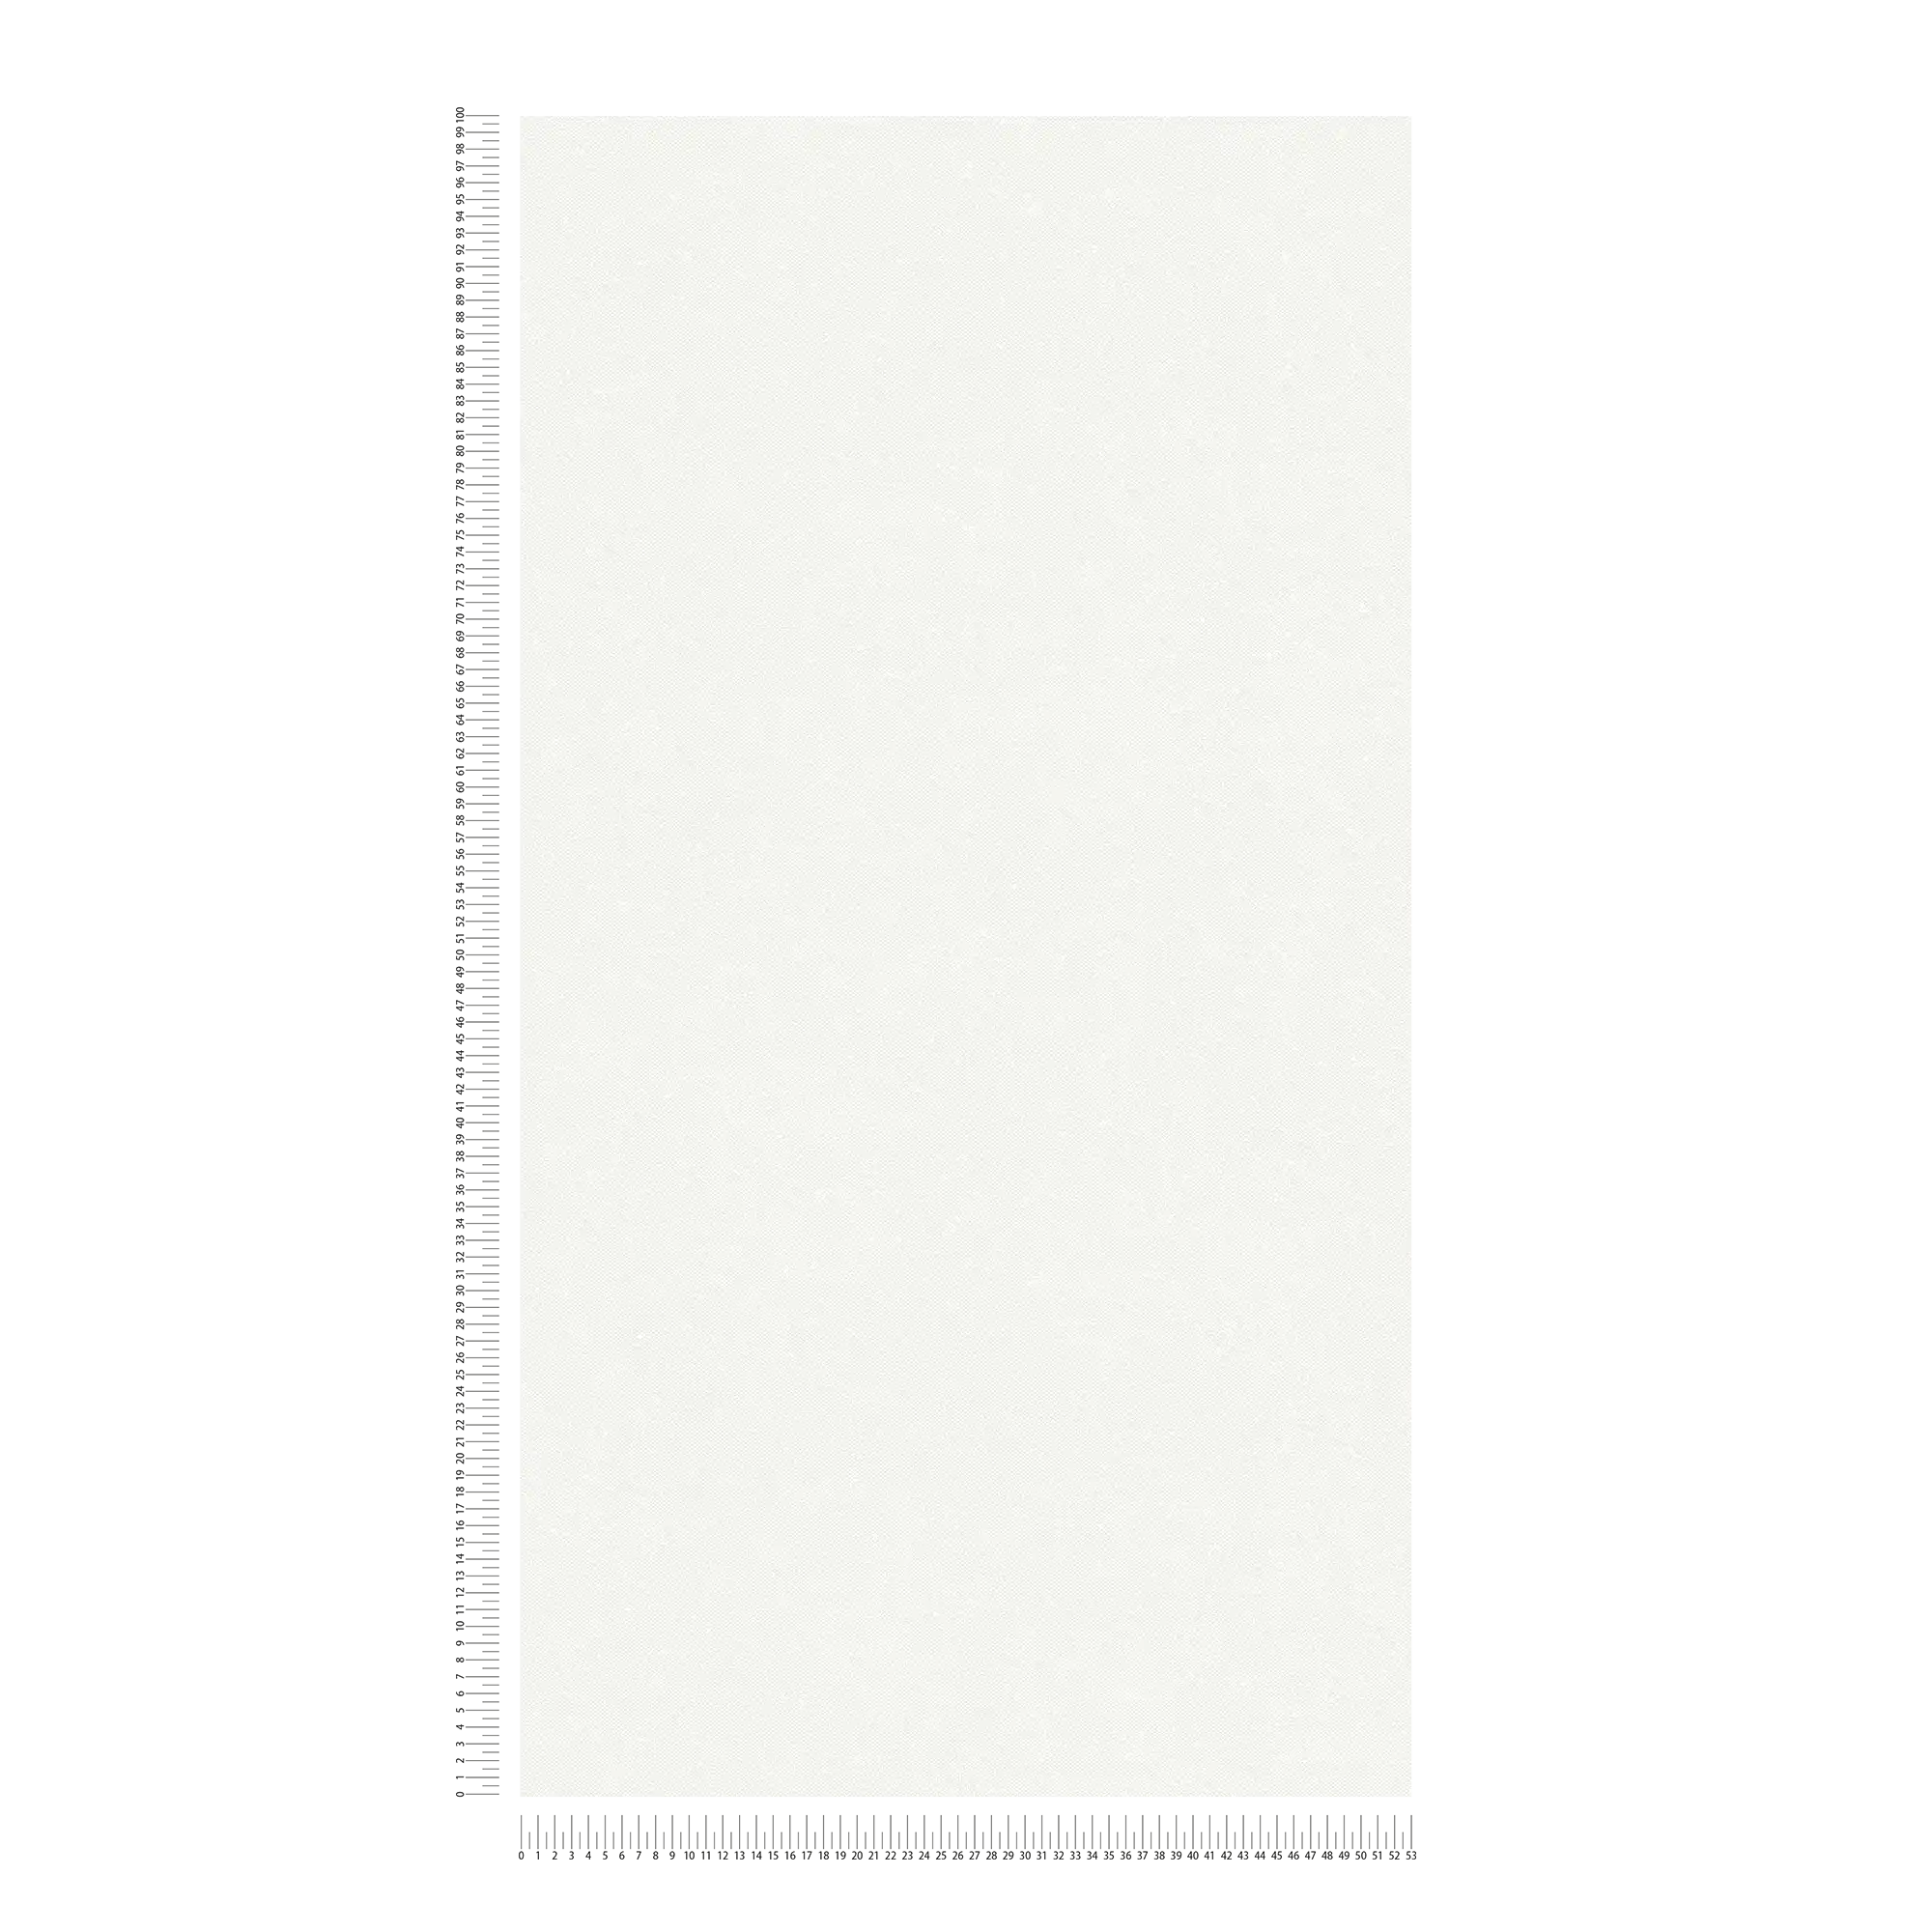             Textile optics wallpaper plain - white, cream
        